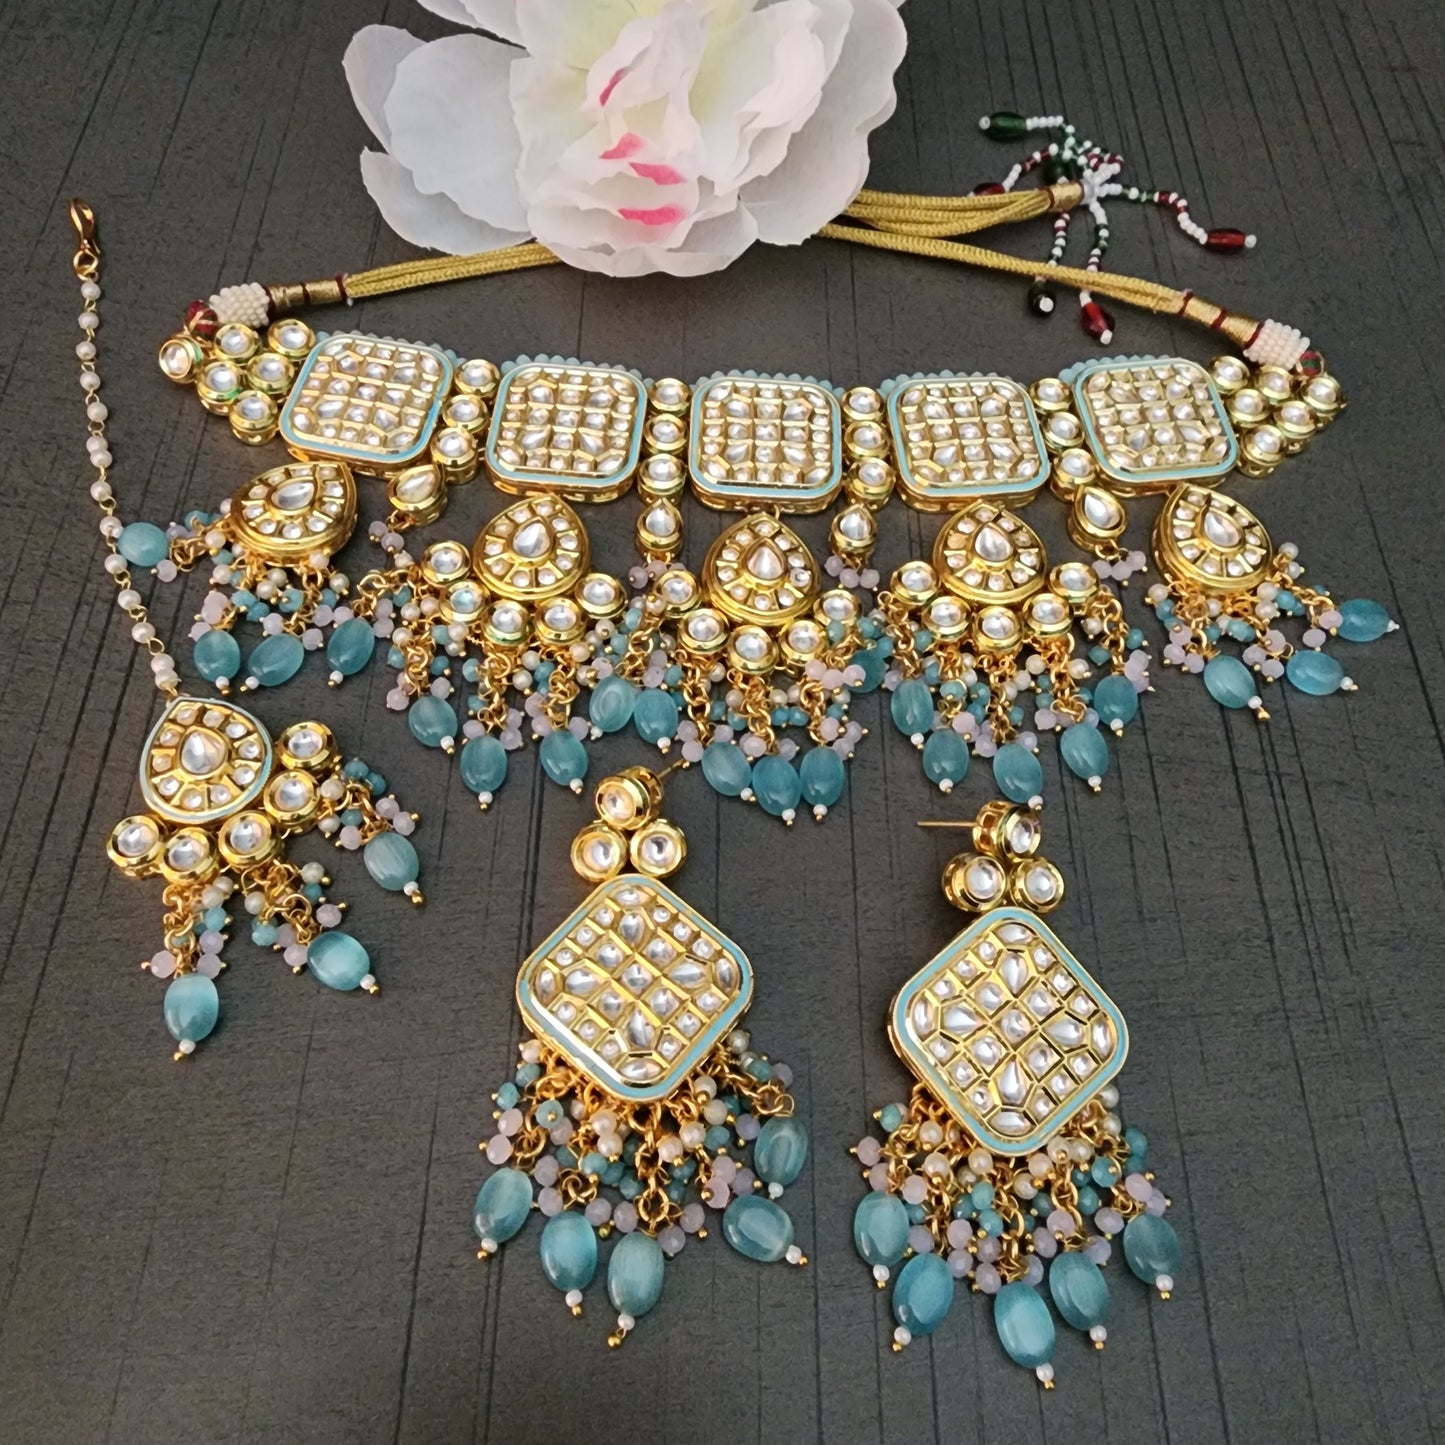 Premium Kundan Necklace, Earrings, and Mangtika